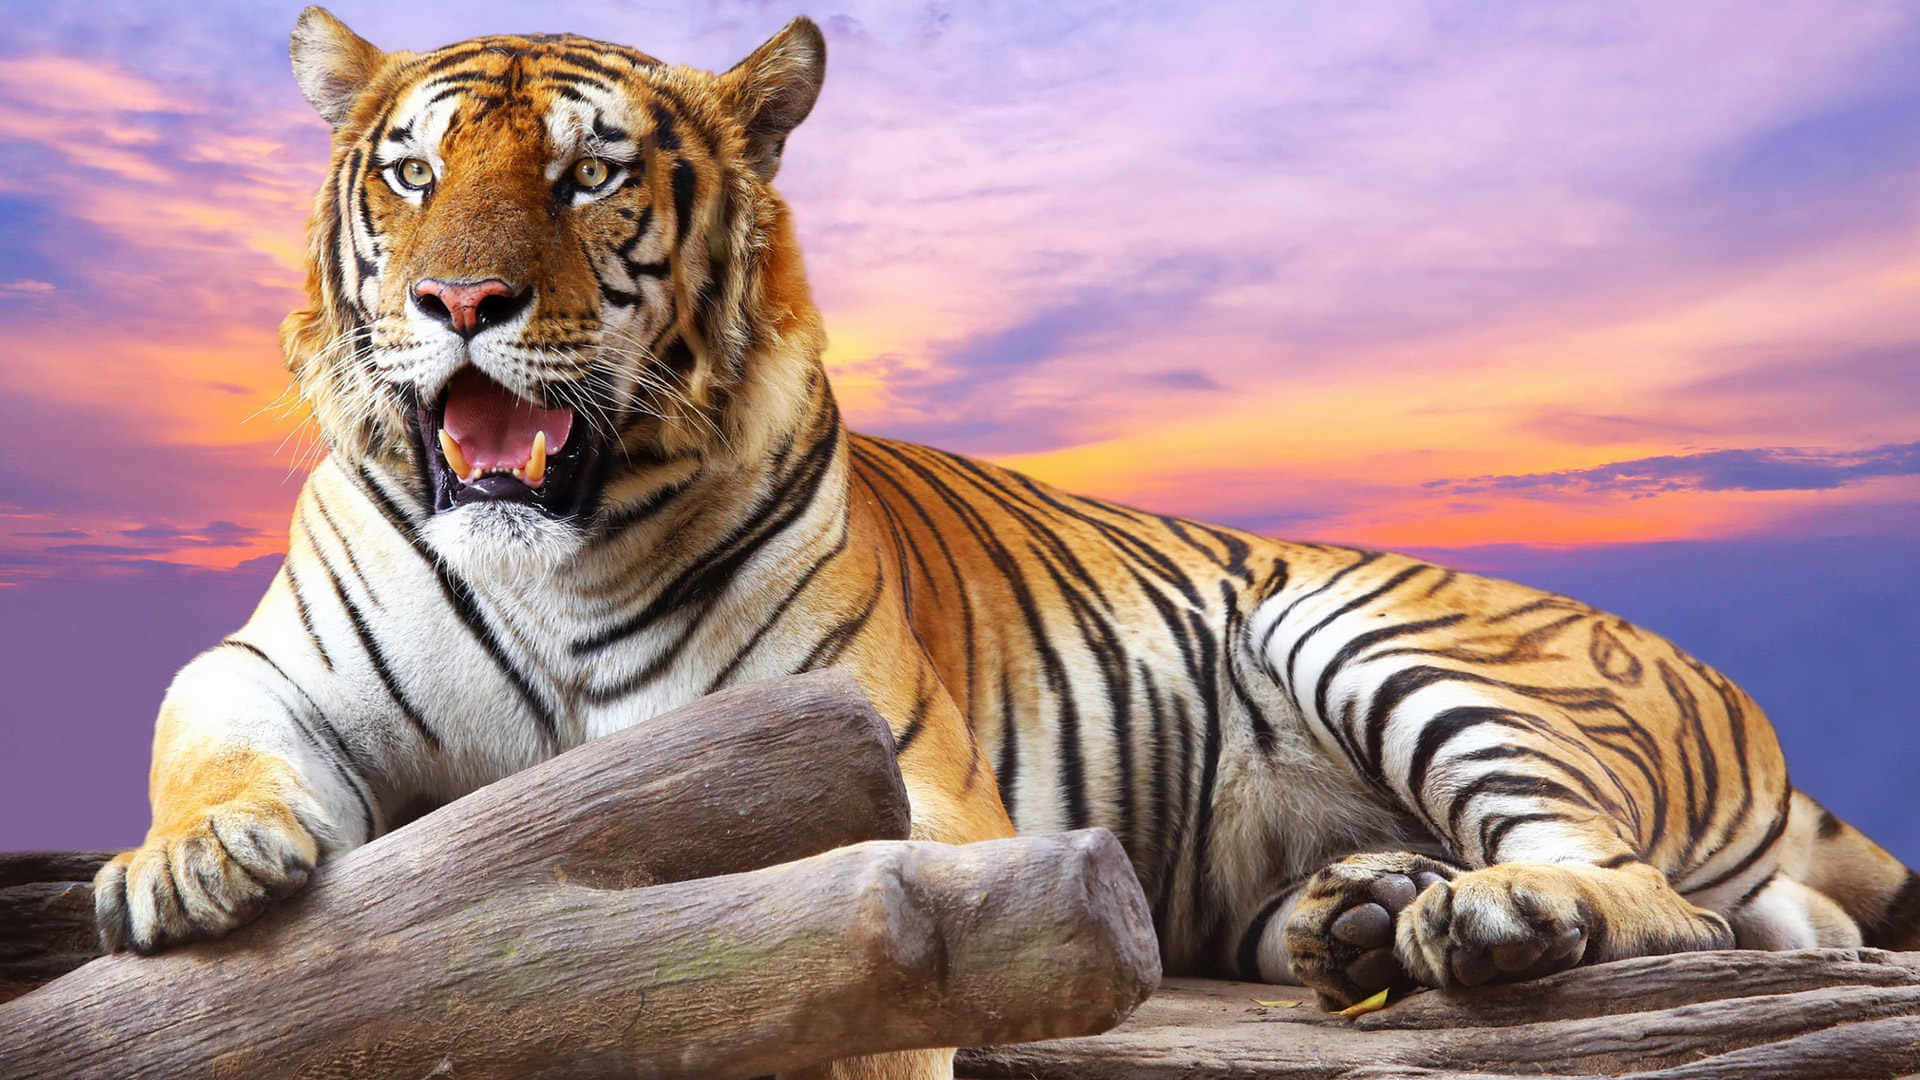 Majestic Tiger in the Jungle